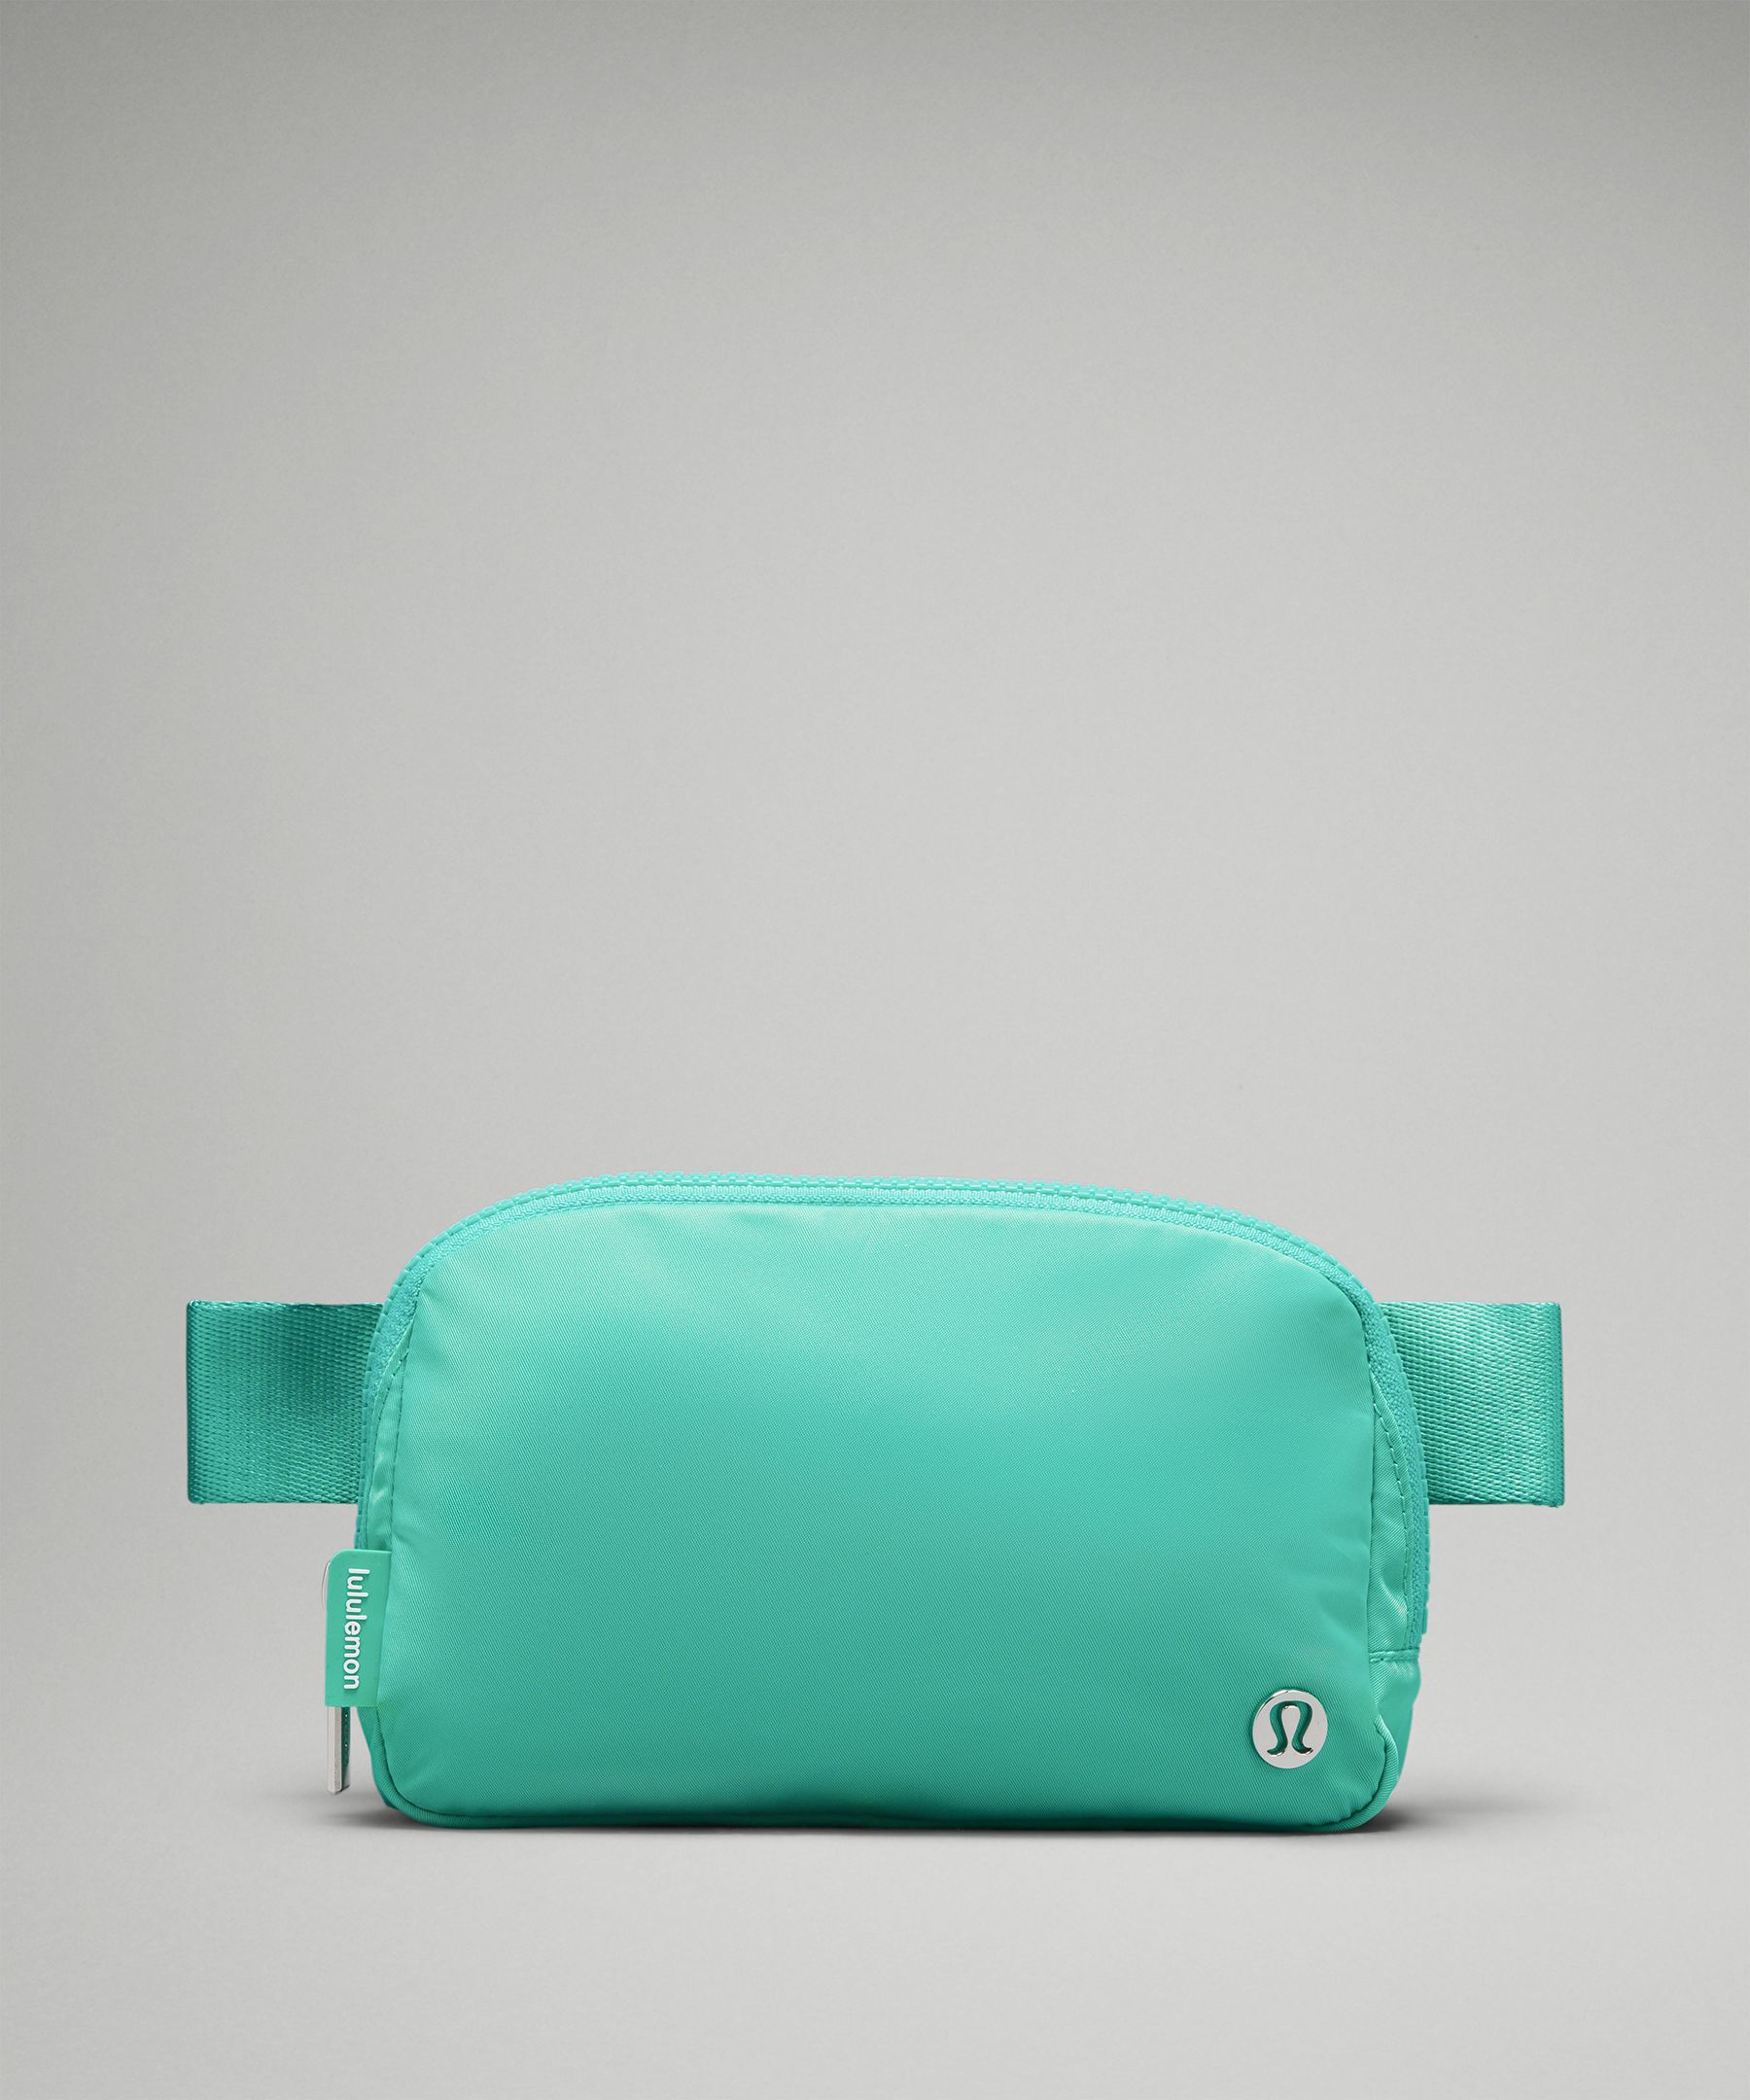 Lululemon Yoga Bag: Large Capacity, Cross Stitch Design For